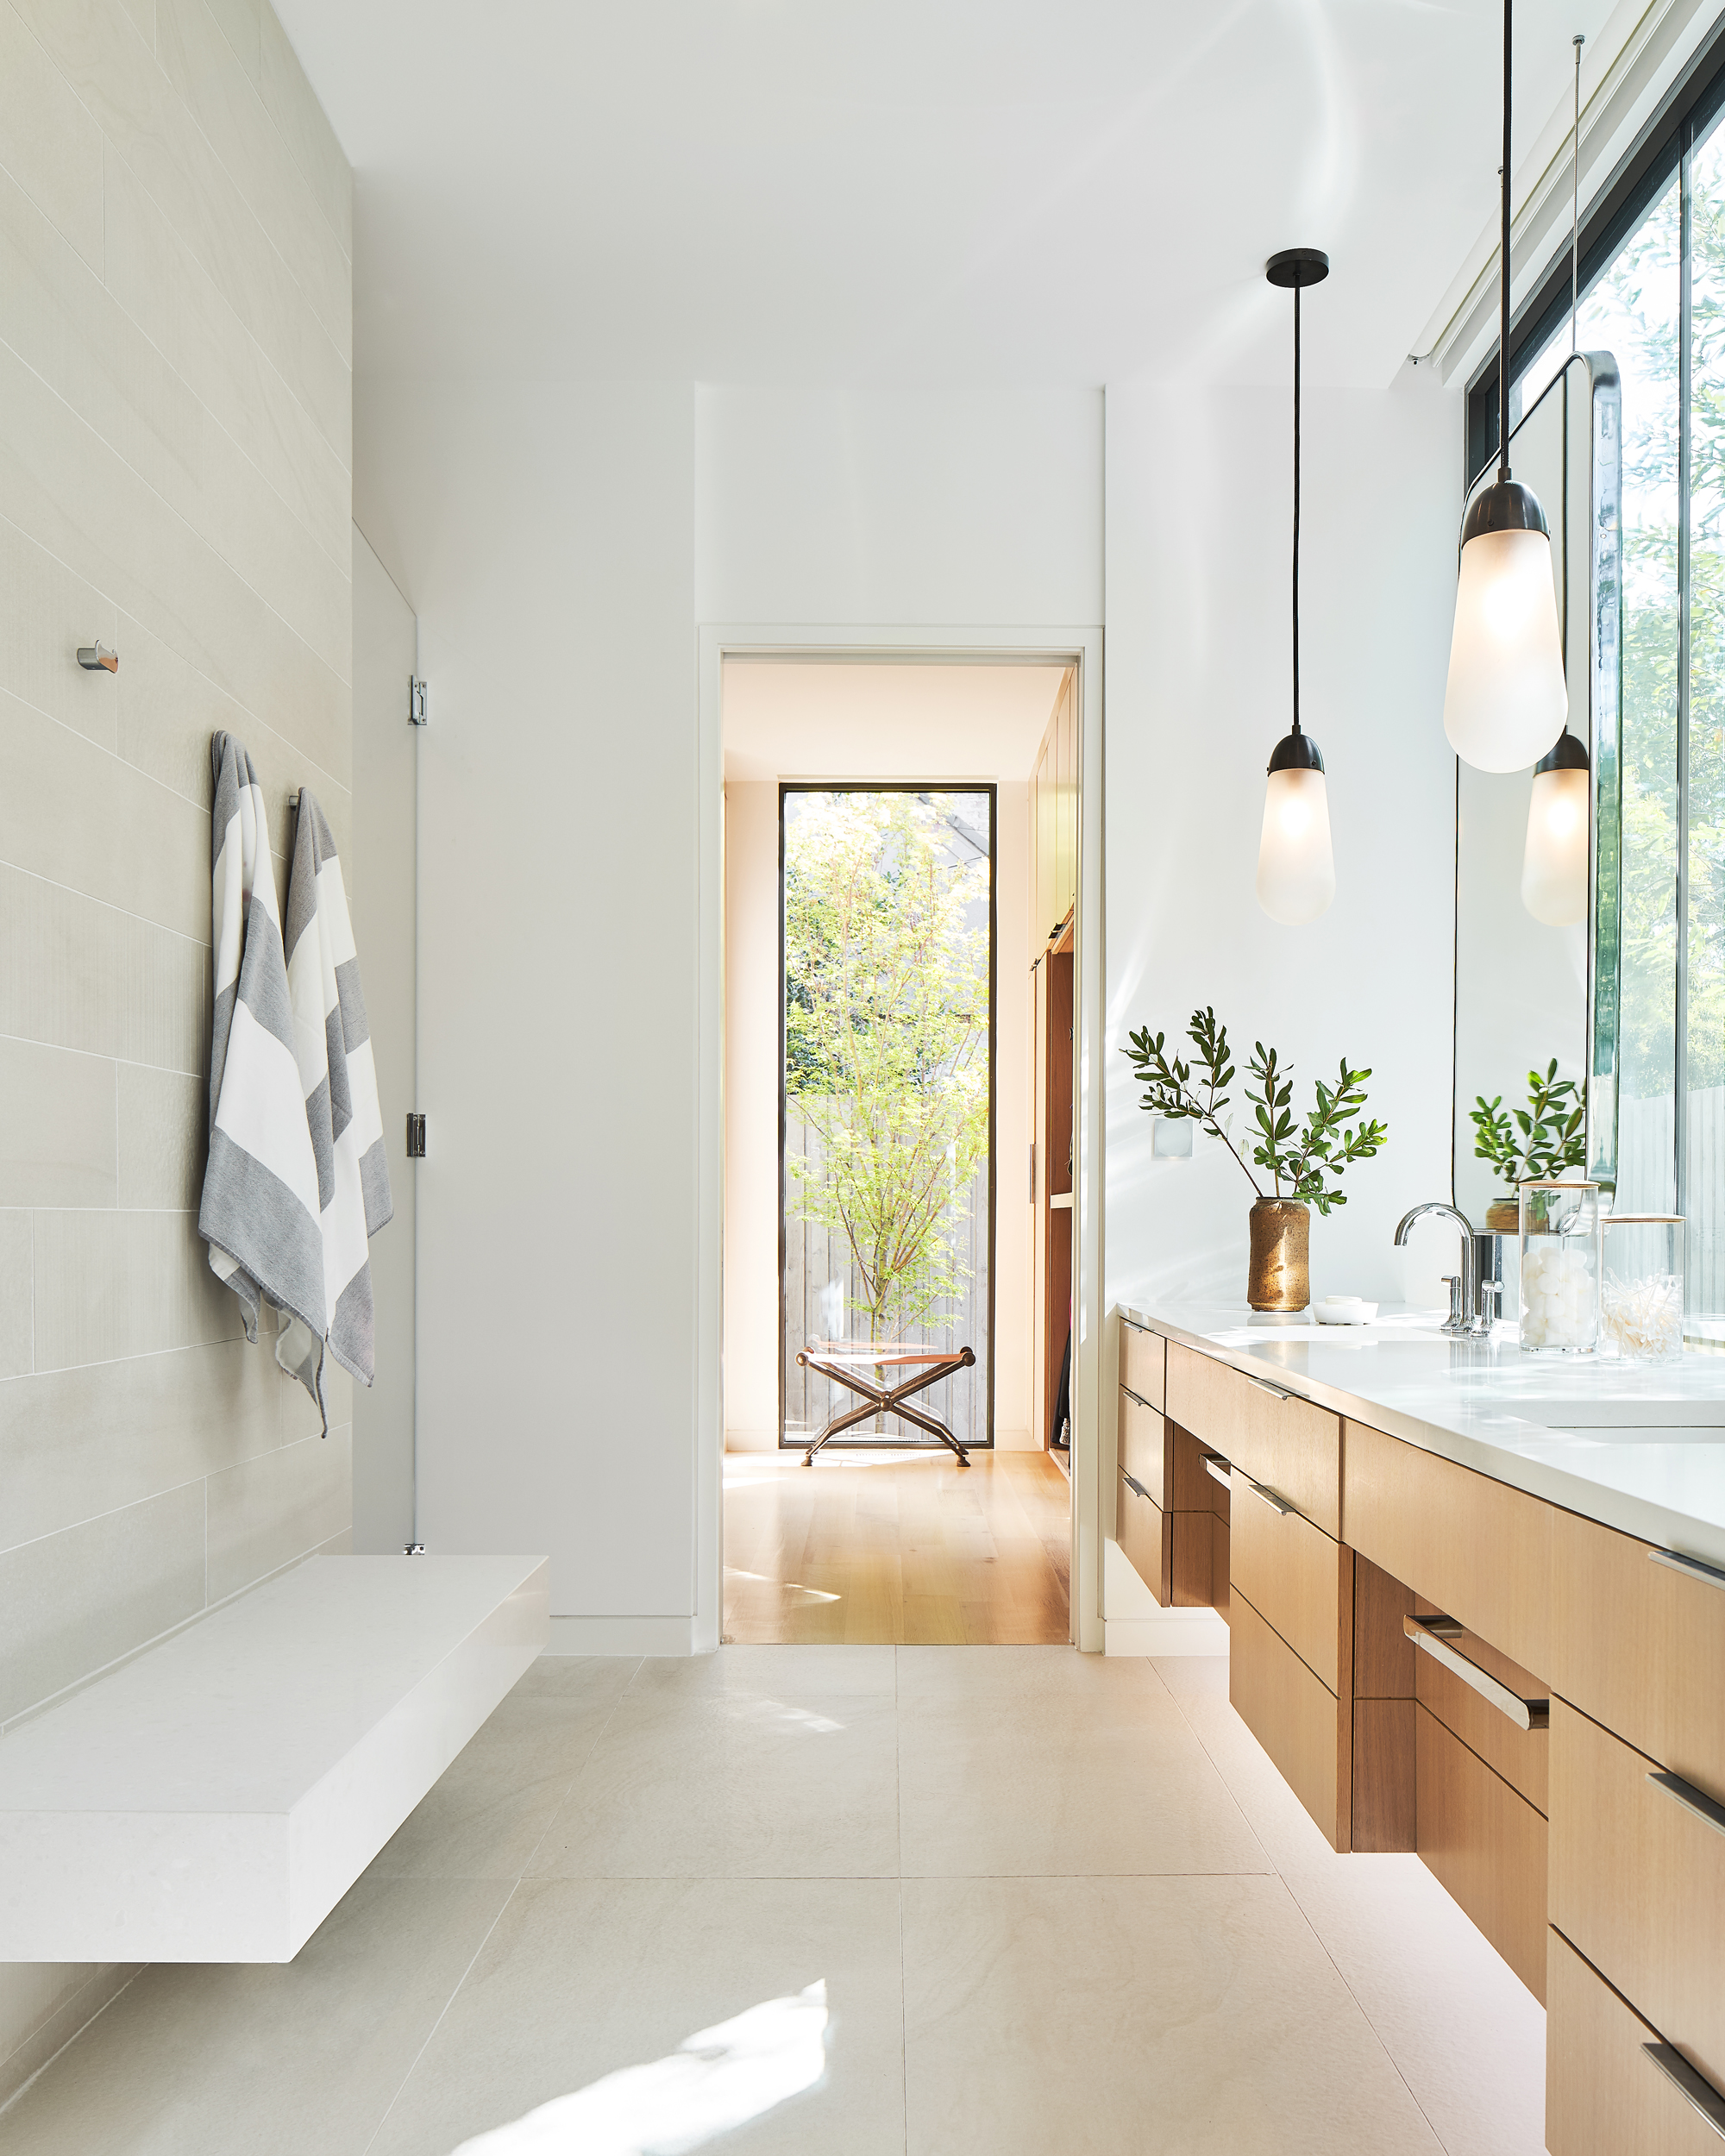 How to Pick Bathroom Vanity Lights: Our 10 Best Tips